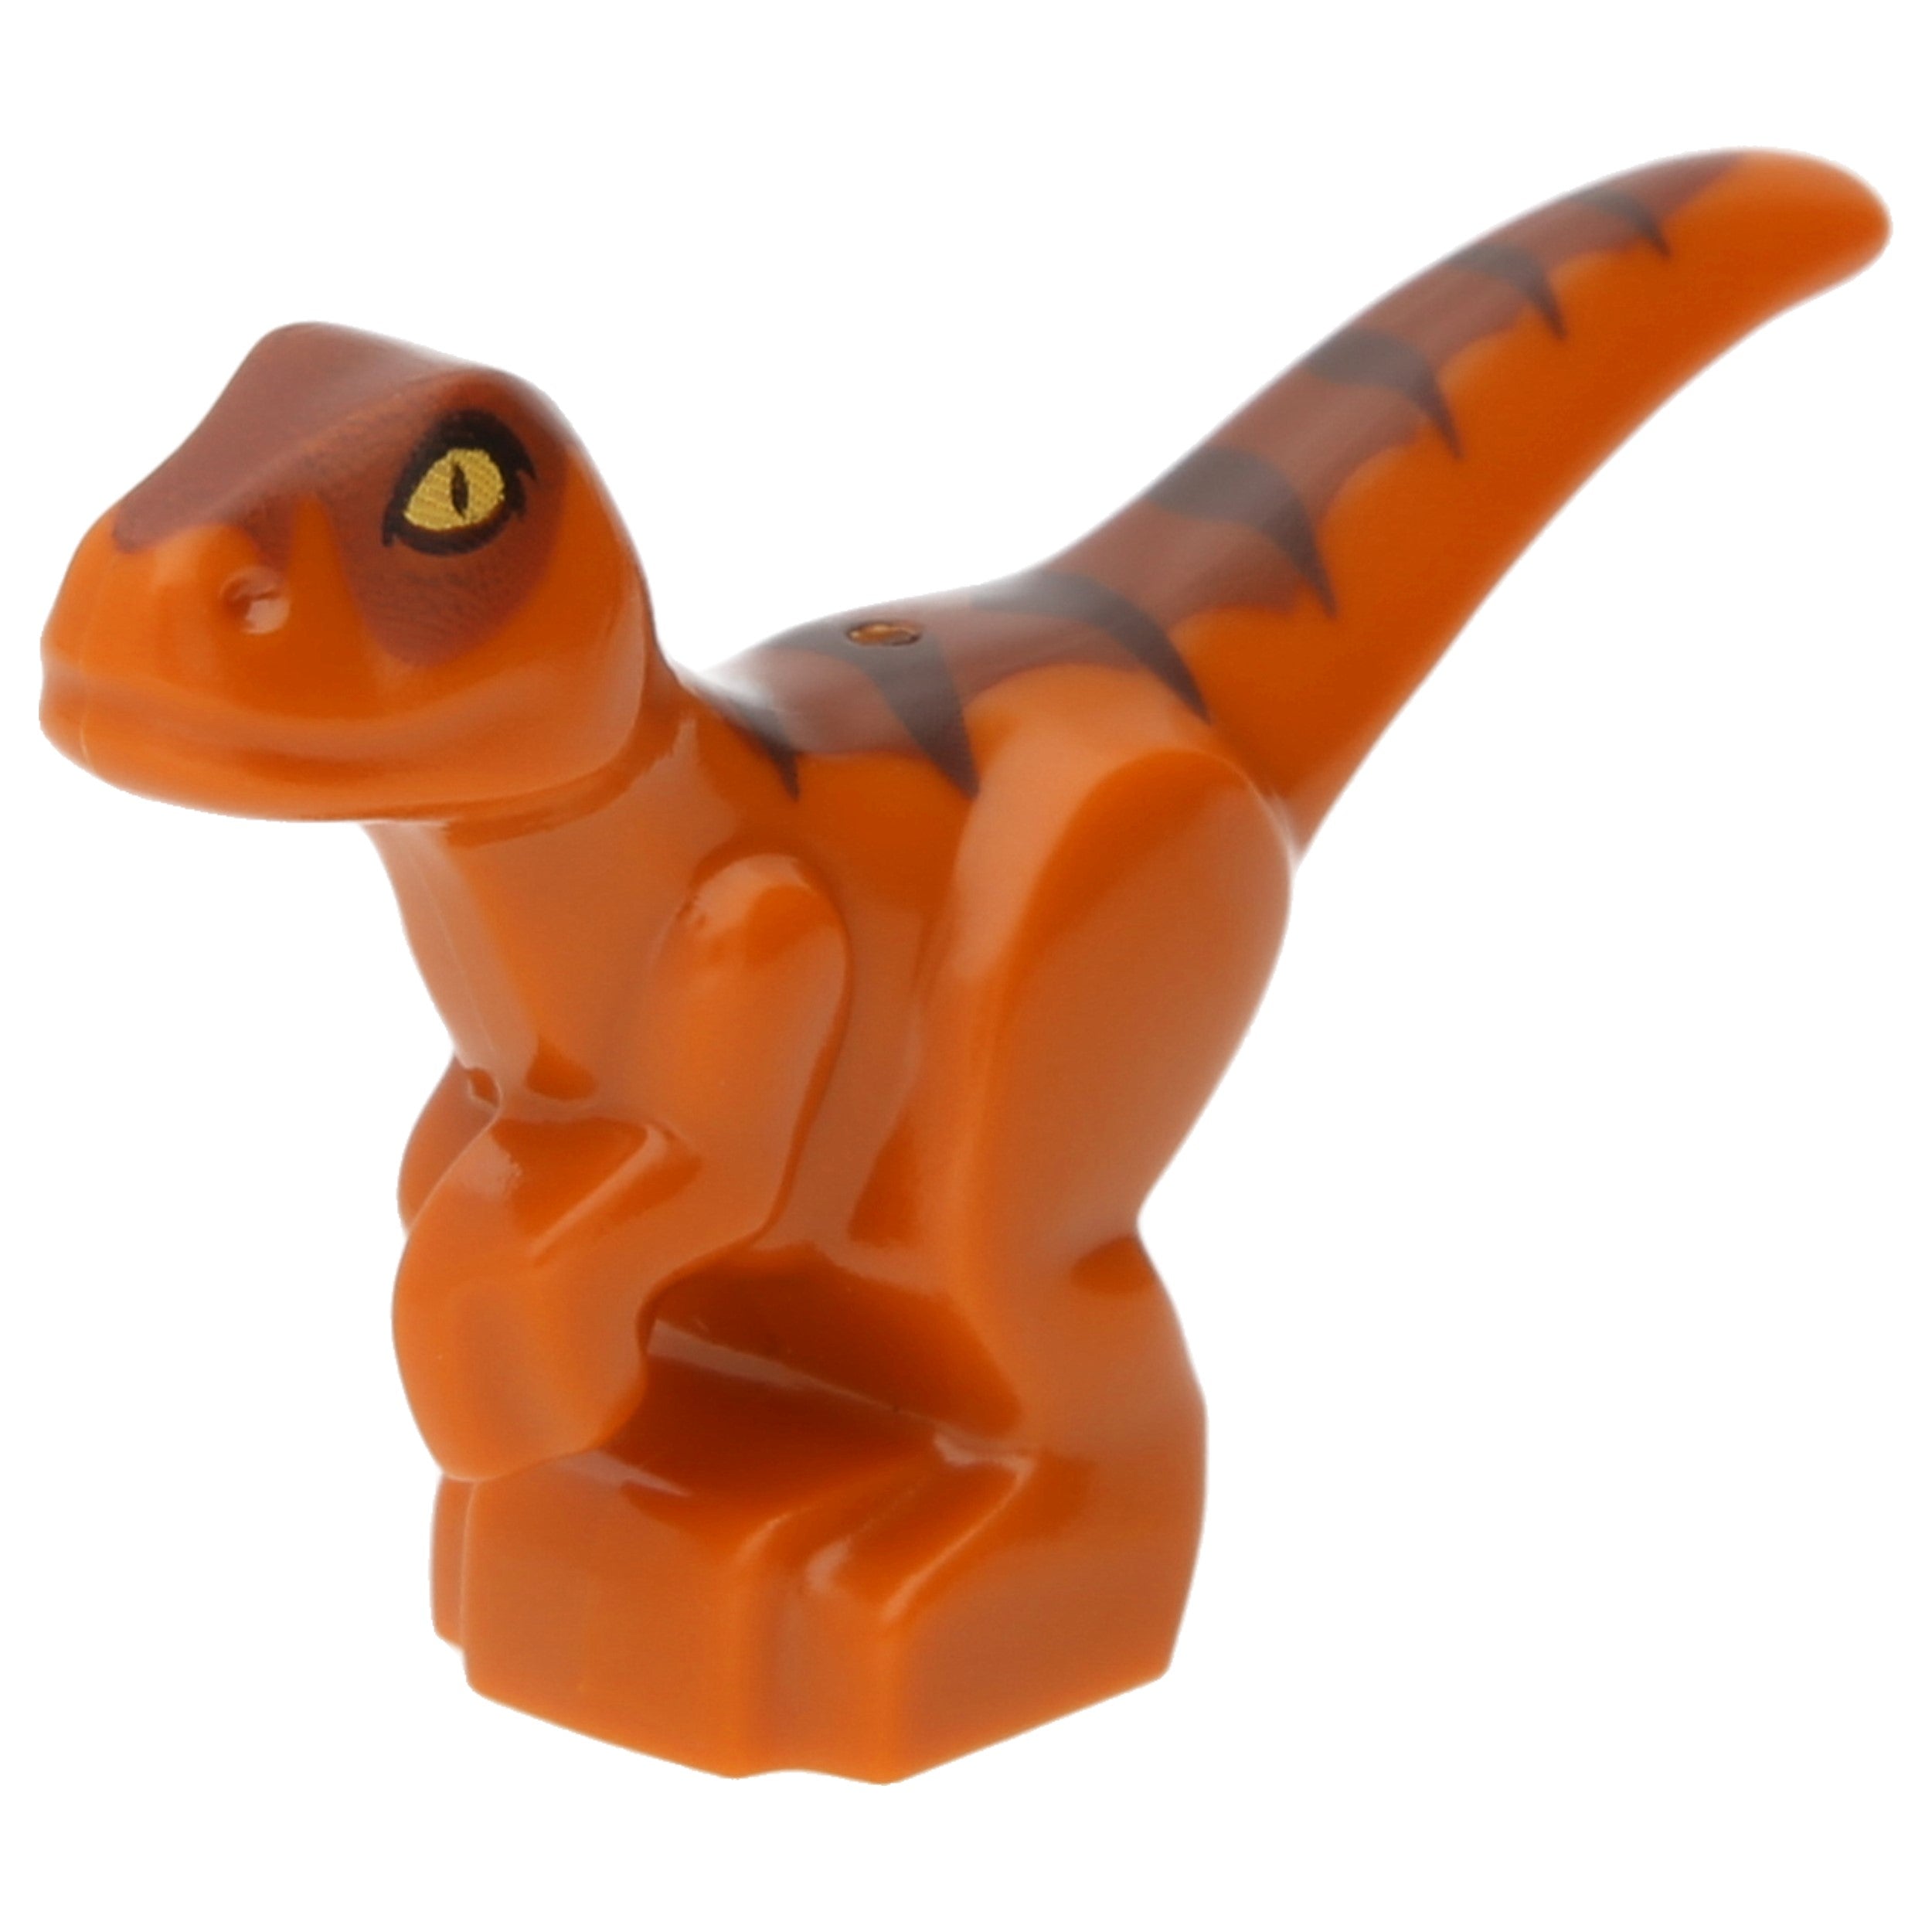 LEGO reptiles/ dinos/ kite - dinosaur baby with dark brown stripes and yellow eyes